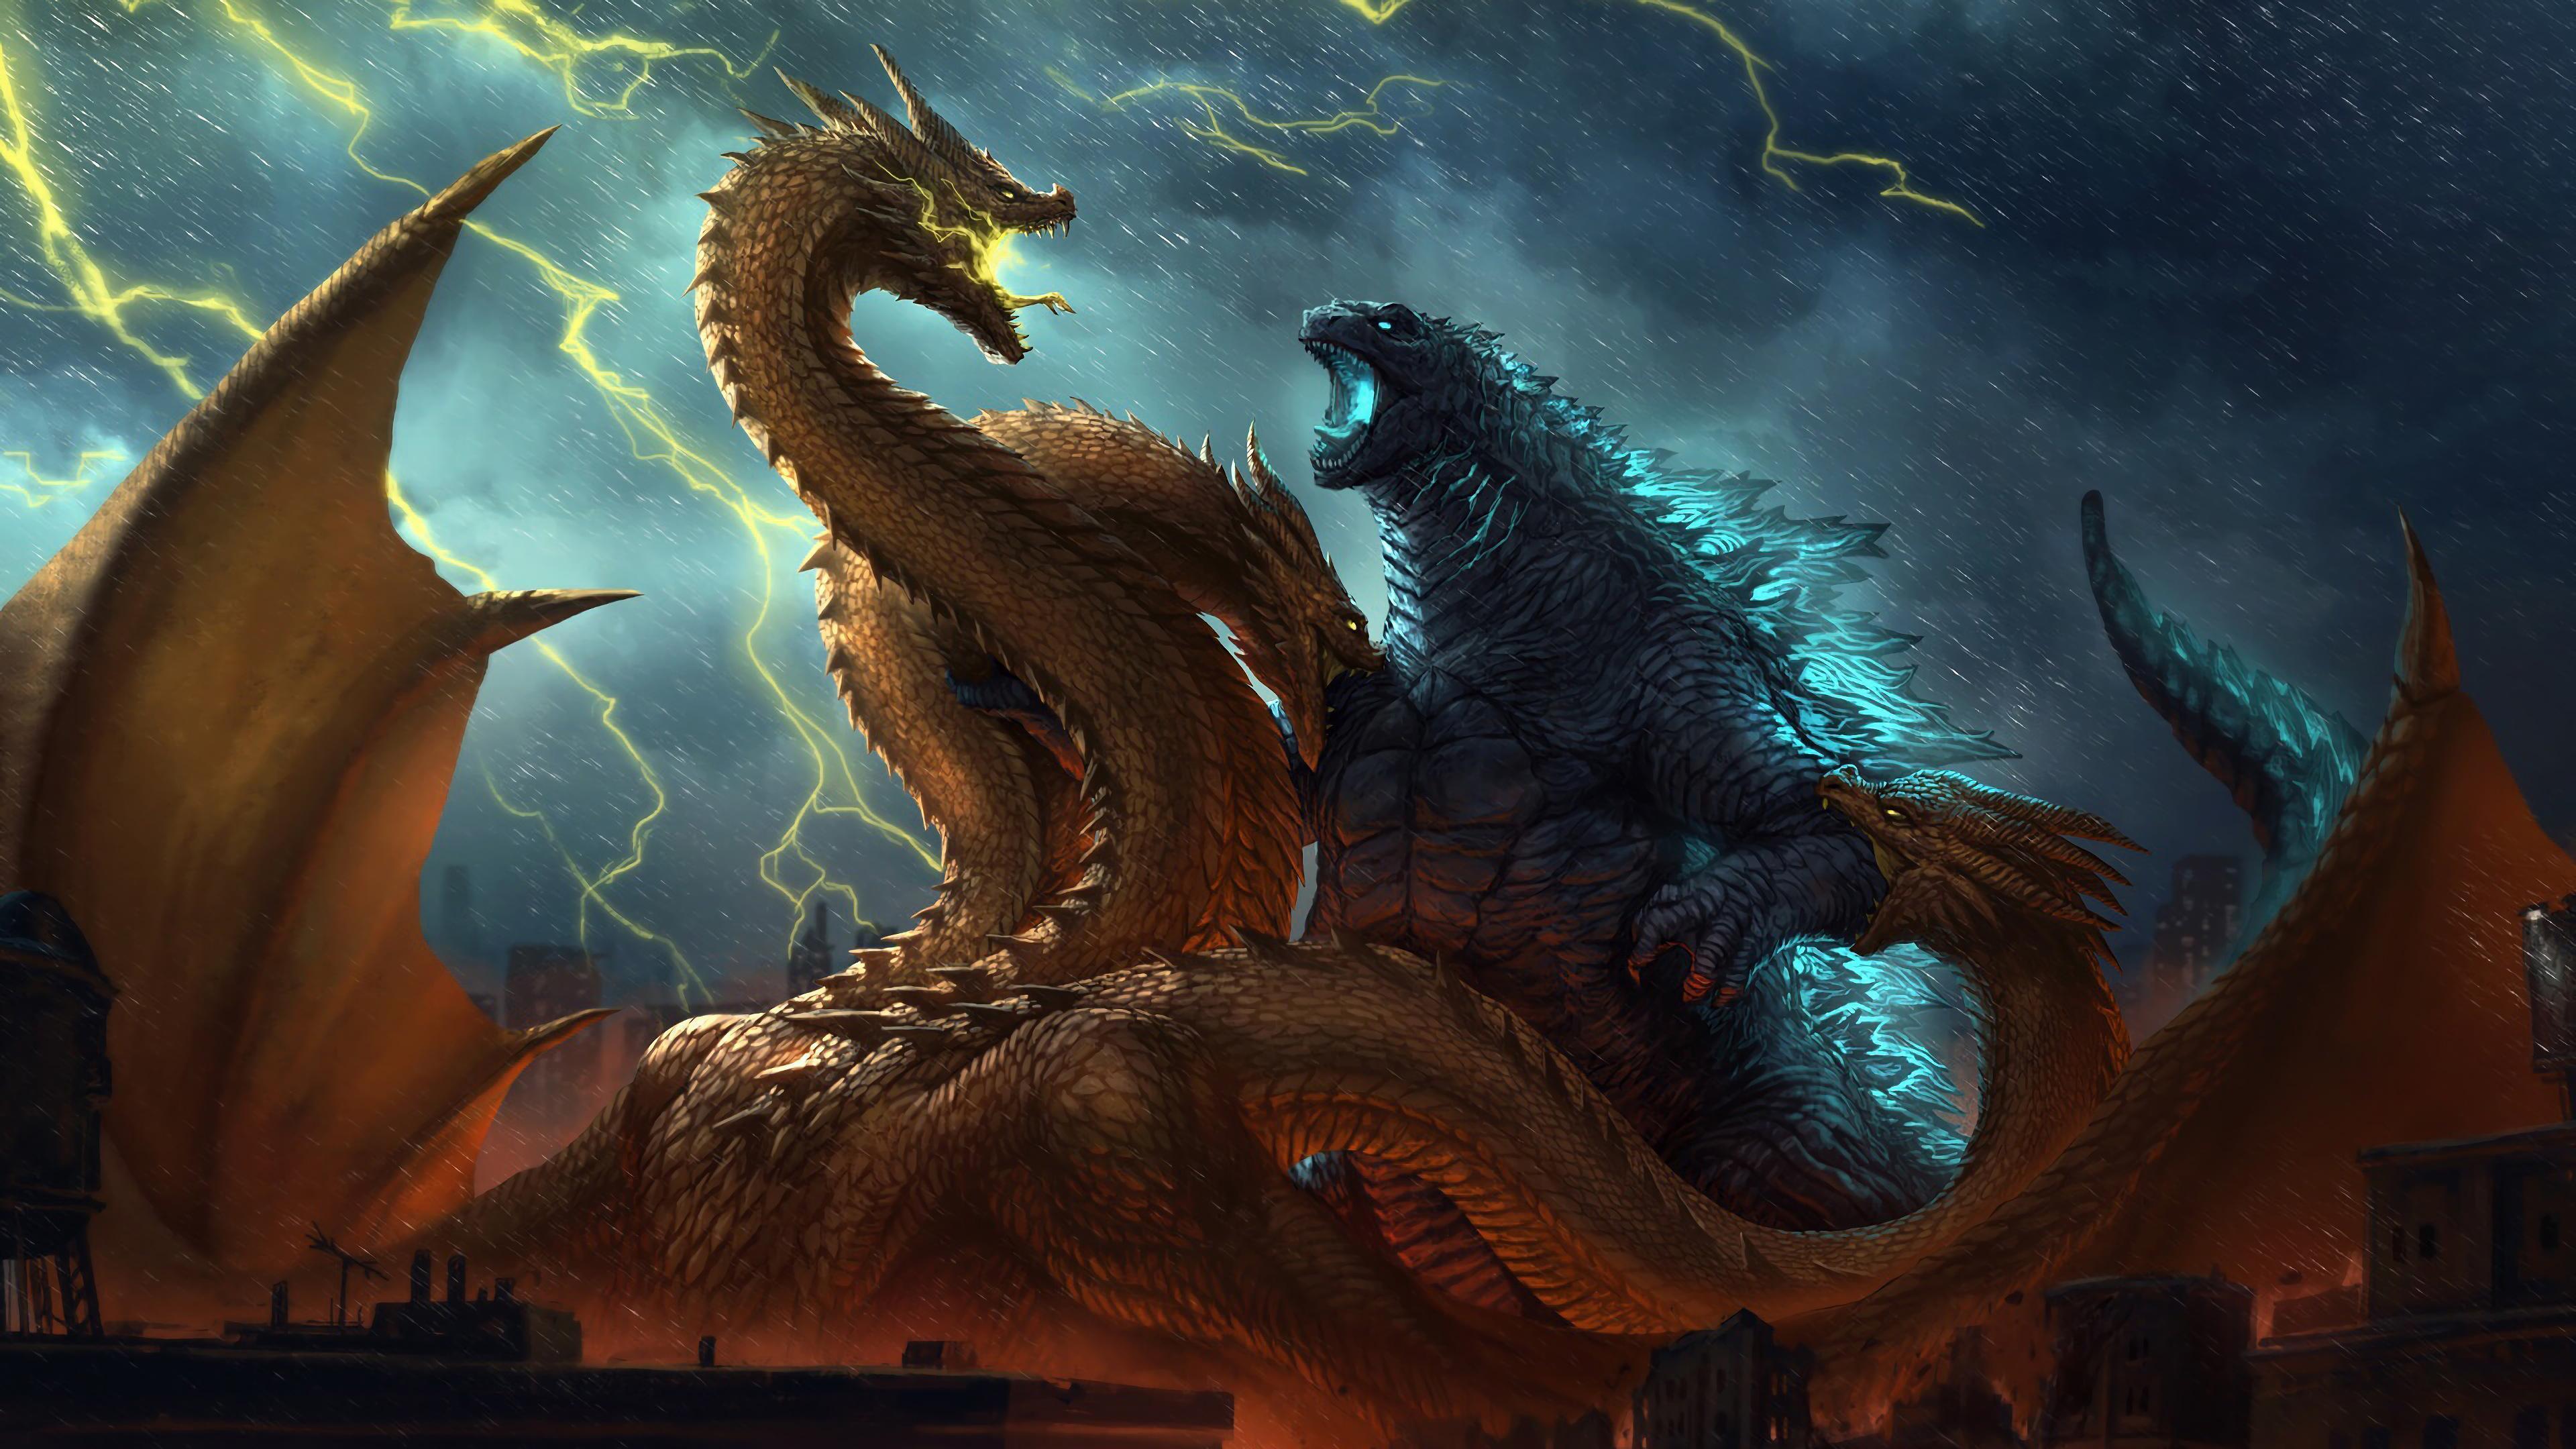 HD wallpaper, Godzilla Vs King Ghidorah, 4K, Godzilla King Of The Monsters